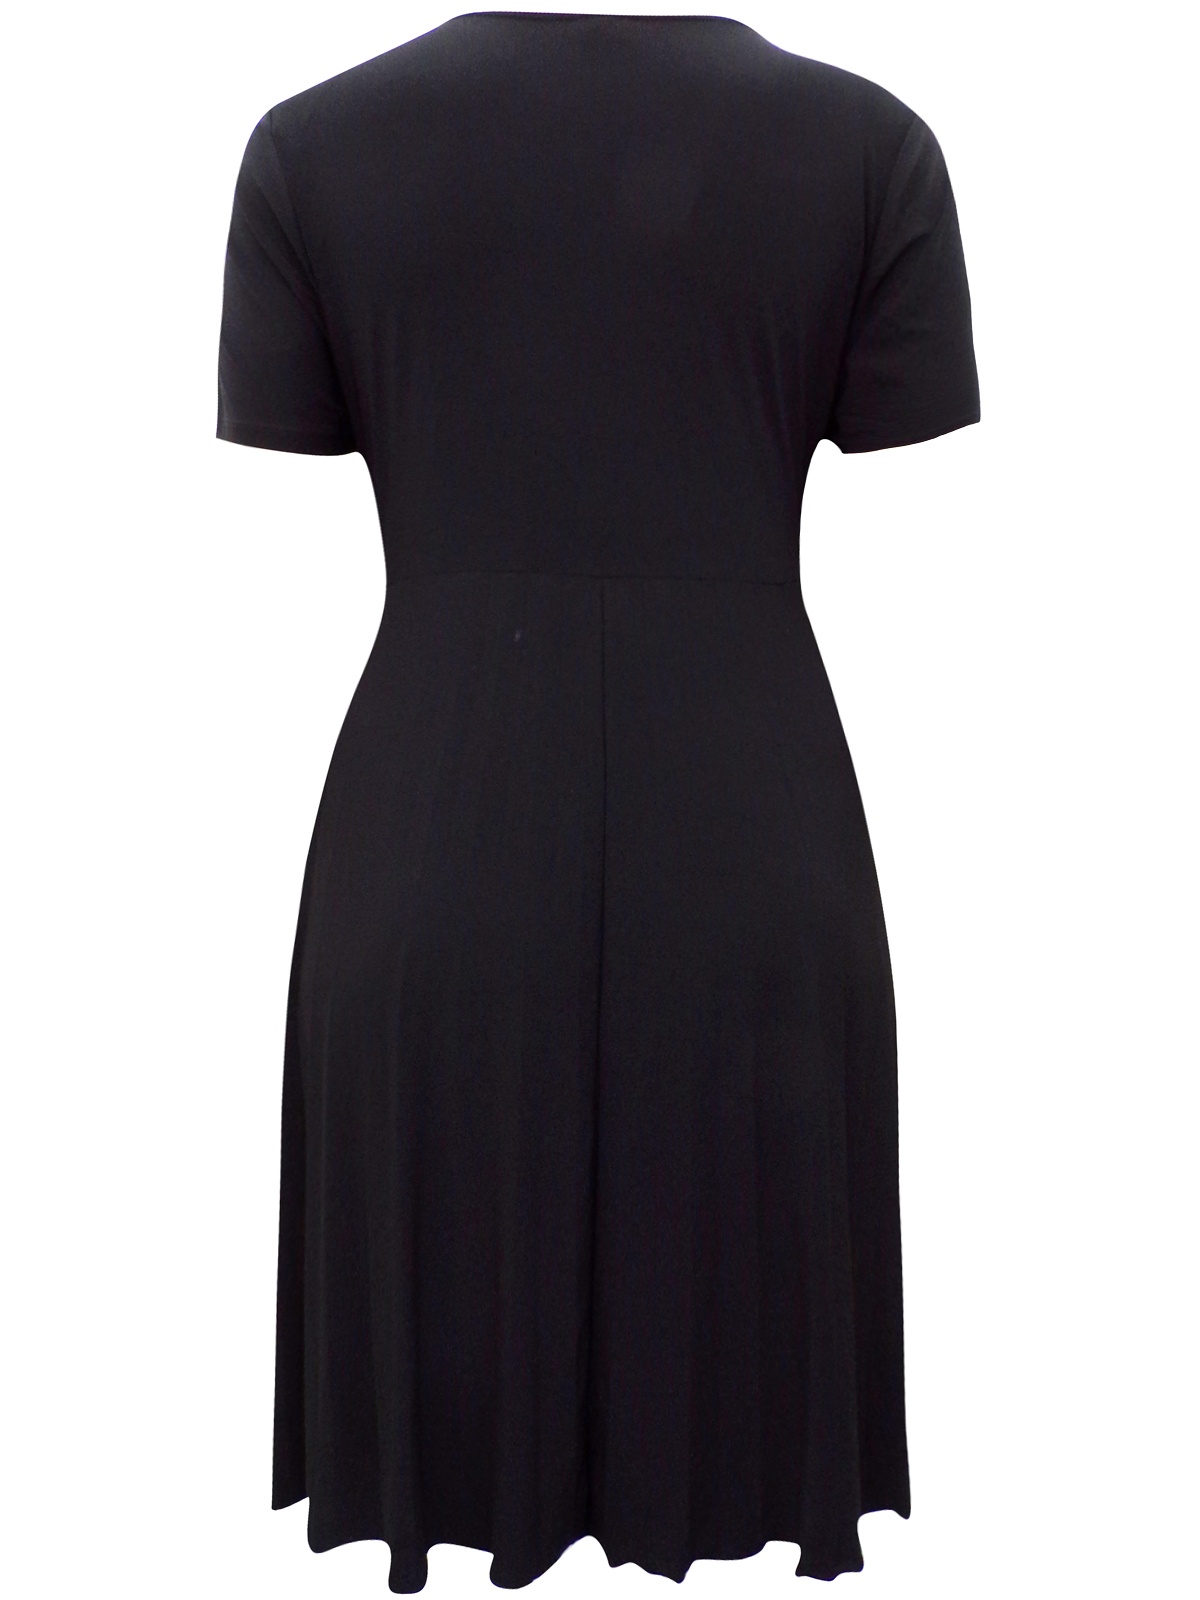 Damart - - Damart BLACK V-Neck Pleated Midi Dress - Size 10 to 28